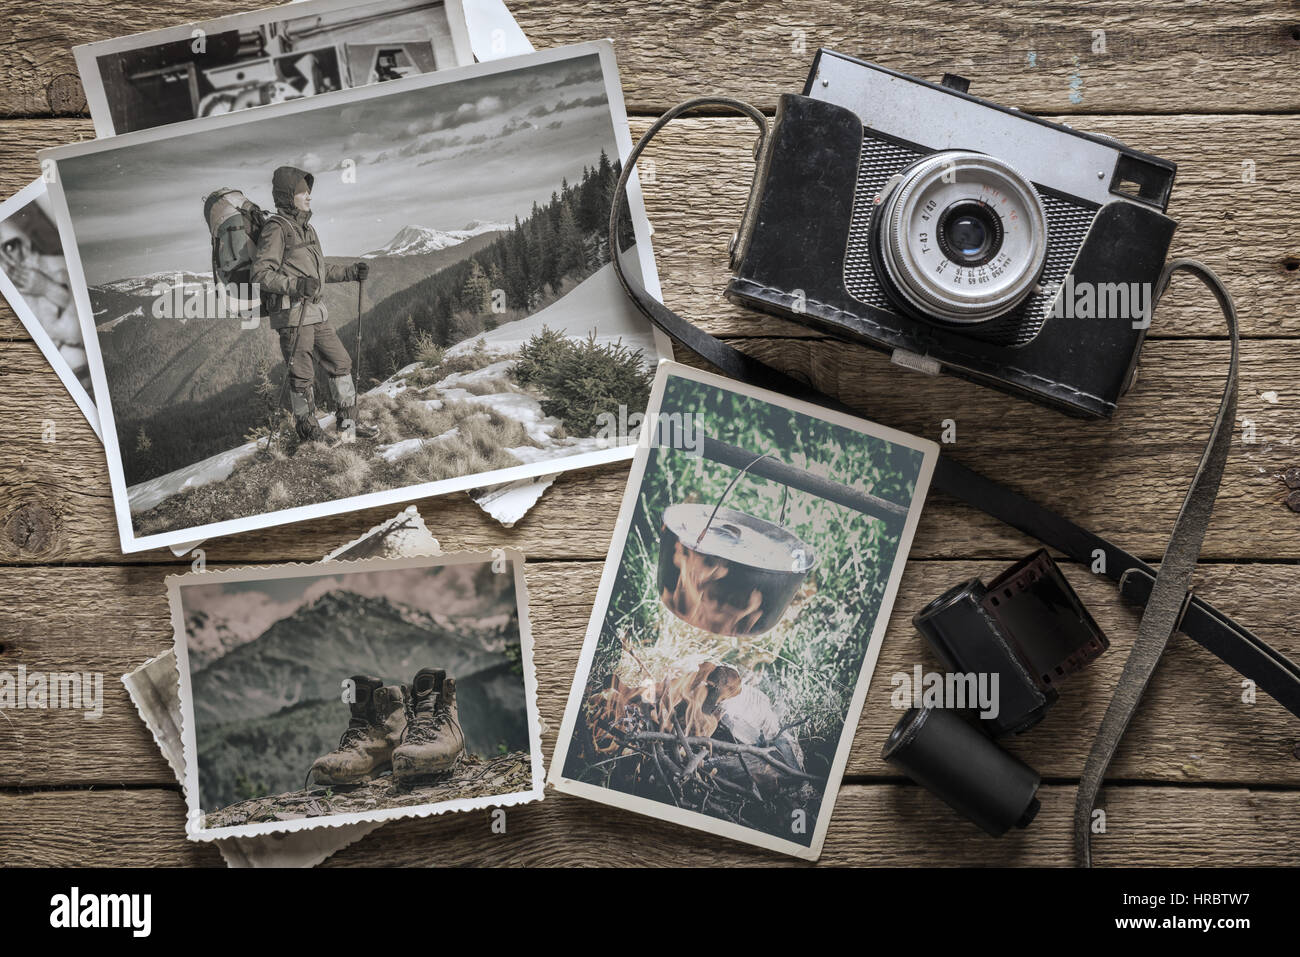 Concepto de fotografia fotografías e imágenes de alta resolución - Alamy